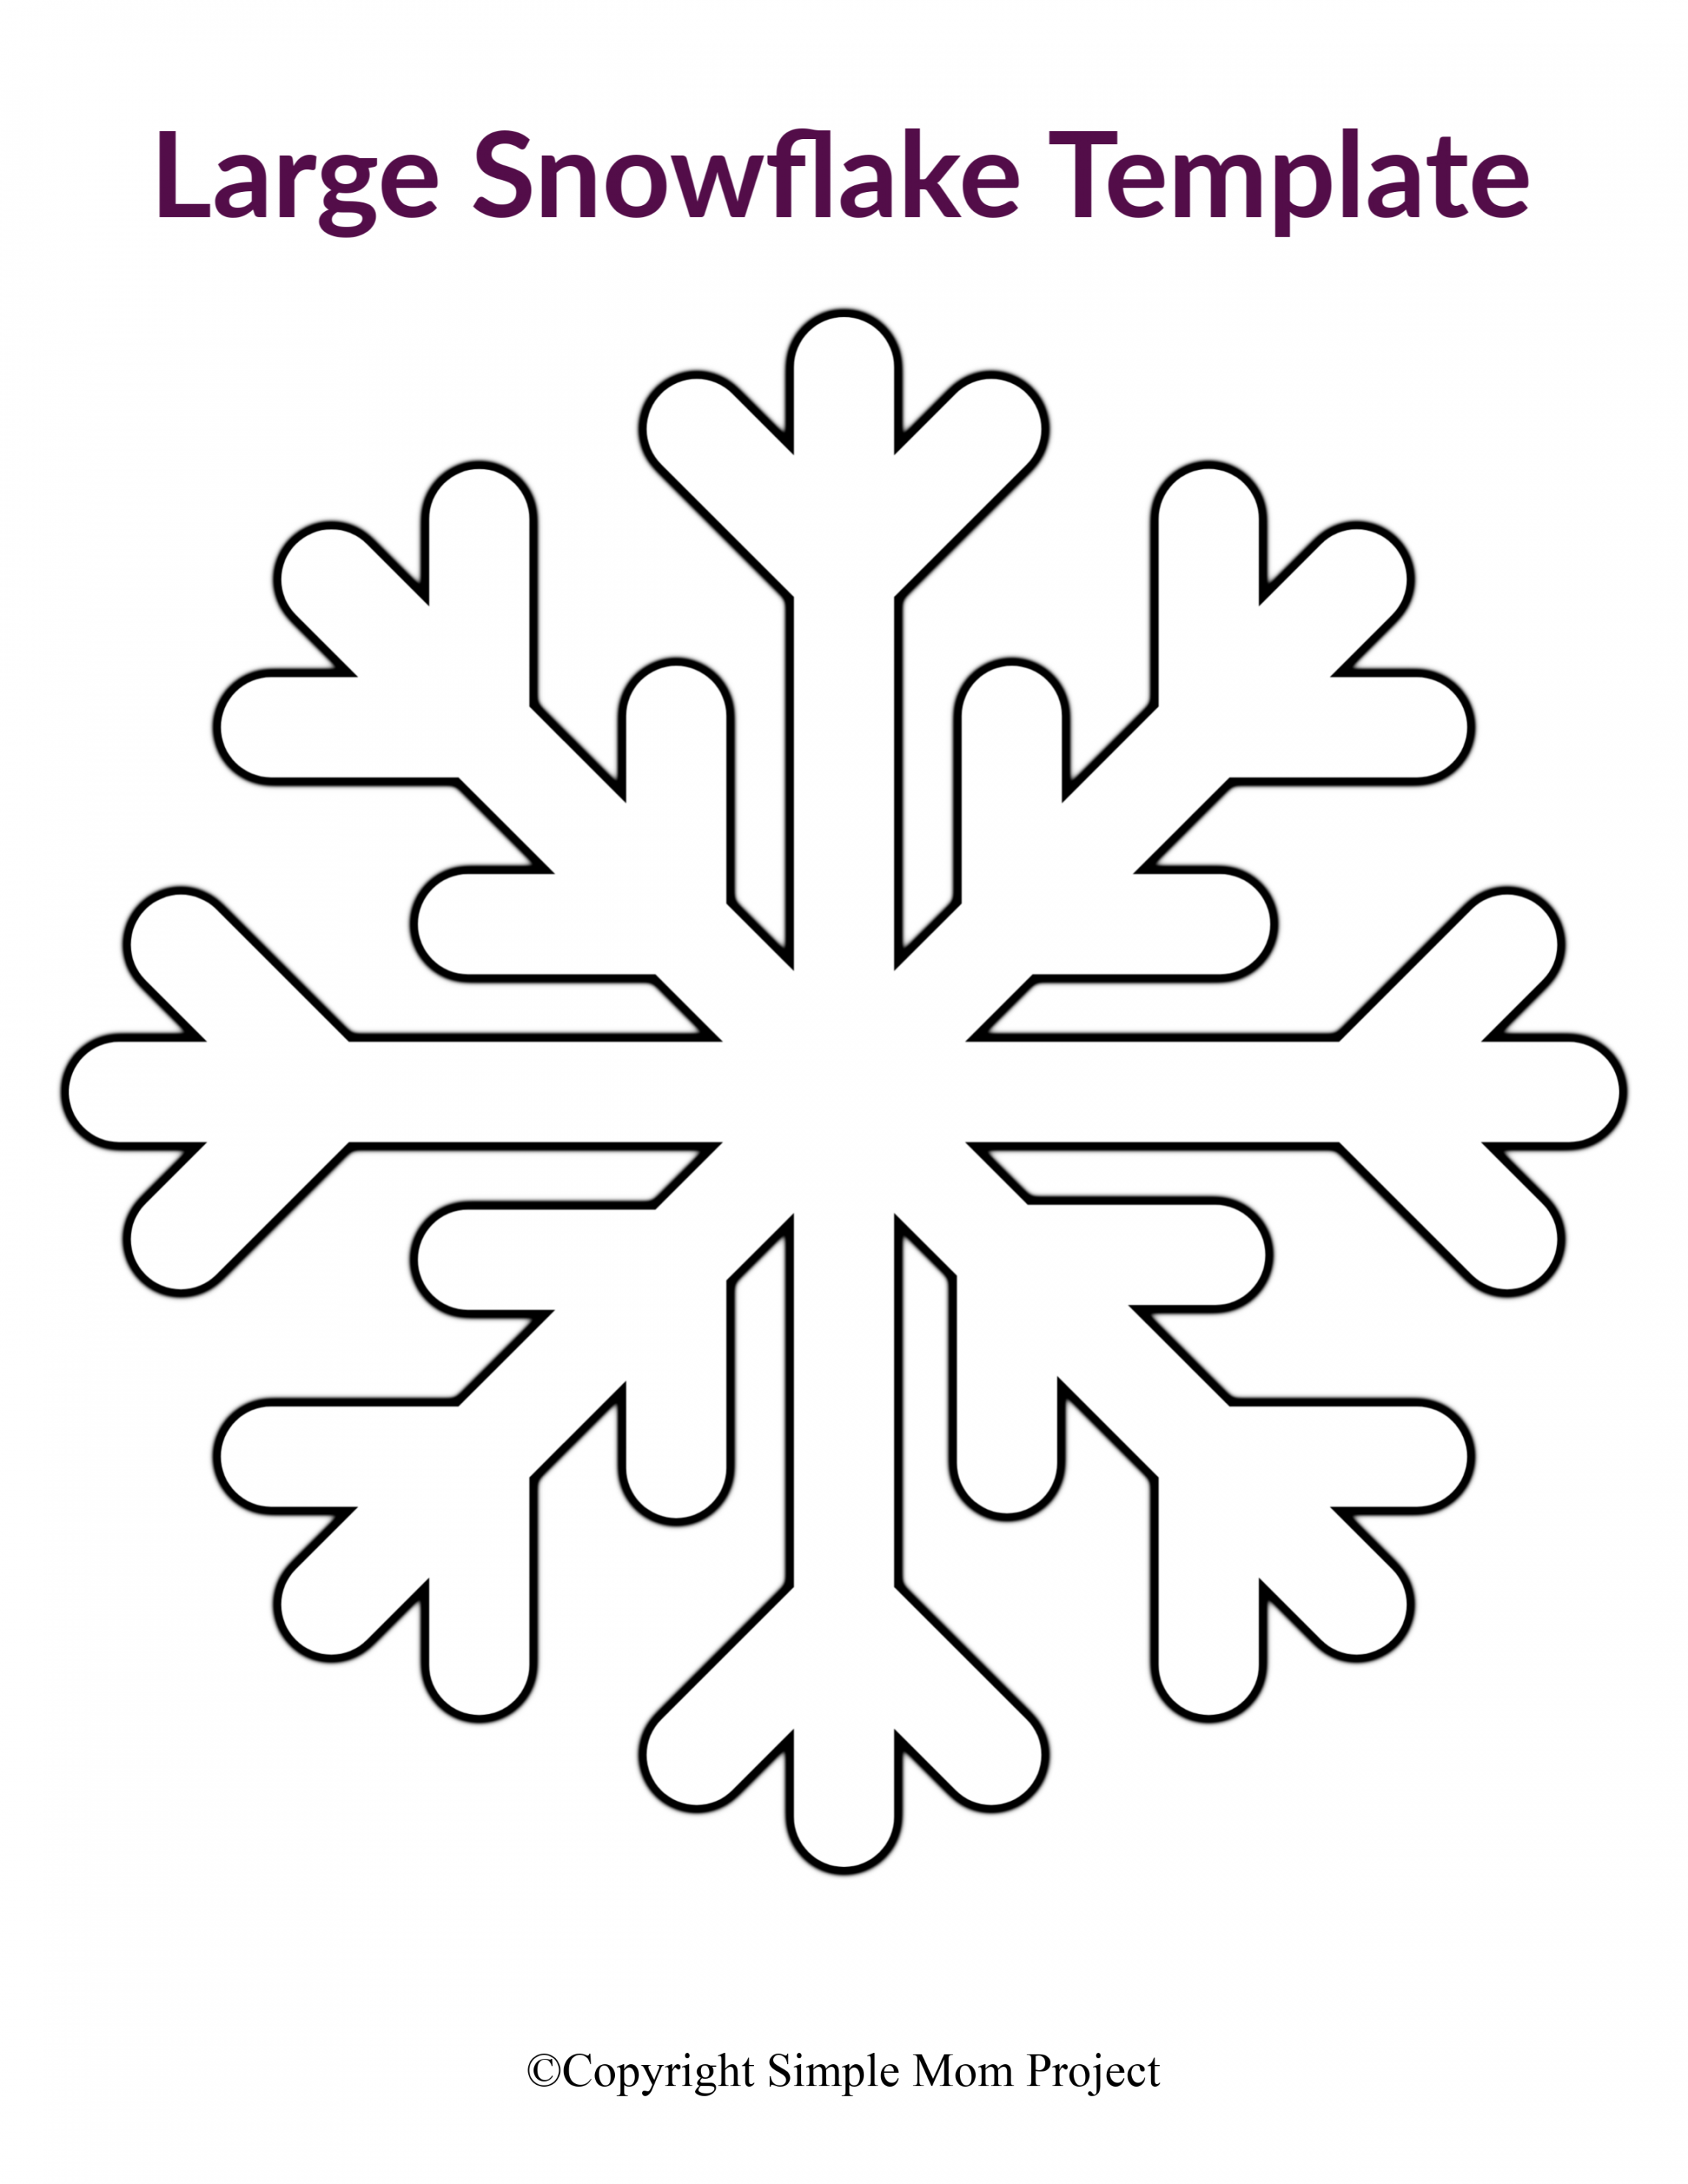 Free Printable Large Snowflake Templates - Simple Mom Project - FREE Printables - Snow Flake Template